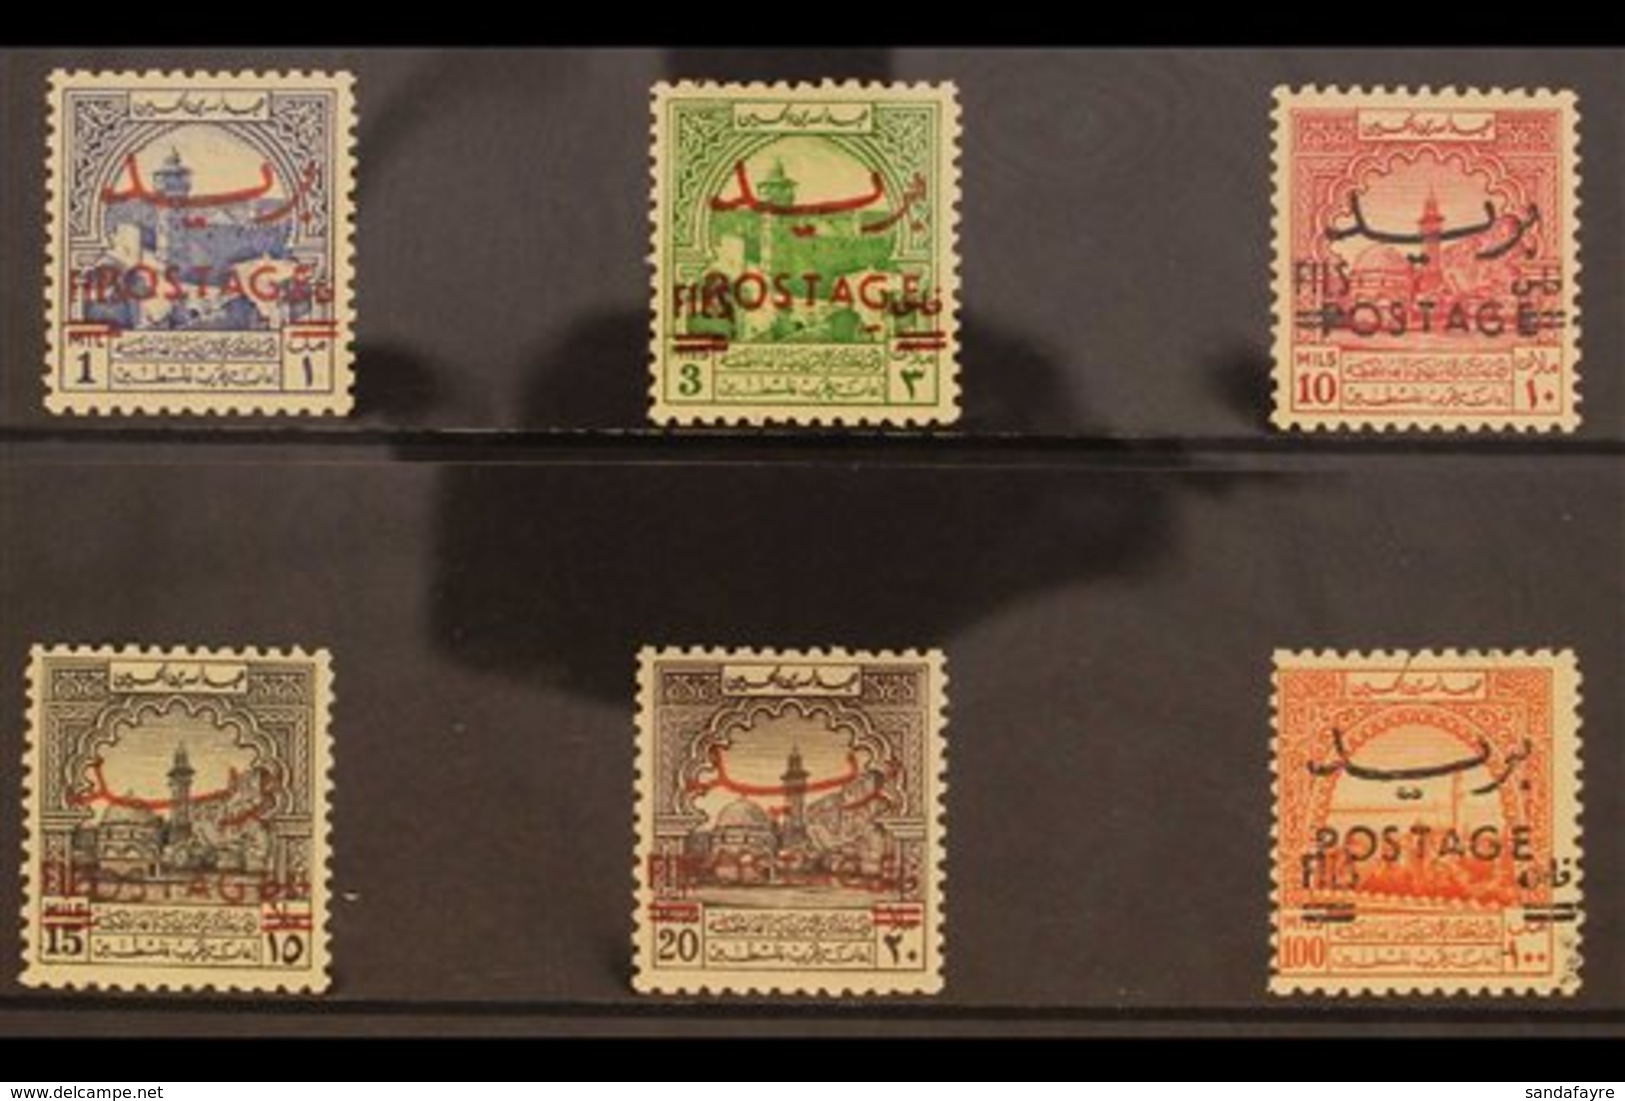 1955 Obligatory Tax Stamps Overprinted "FILS" For Ordinary Postal Use Set, SG 402/407, Never Hinged Mint (6 Stamps) For  - Jordanien